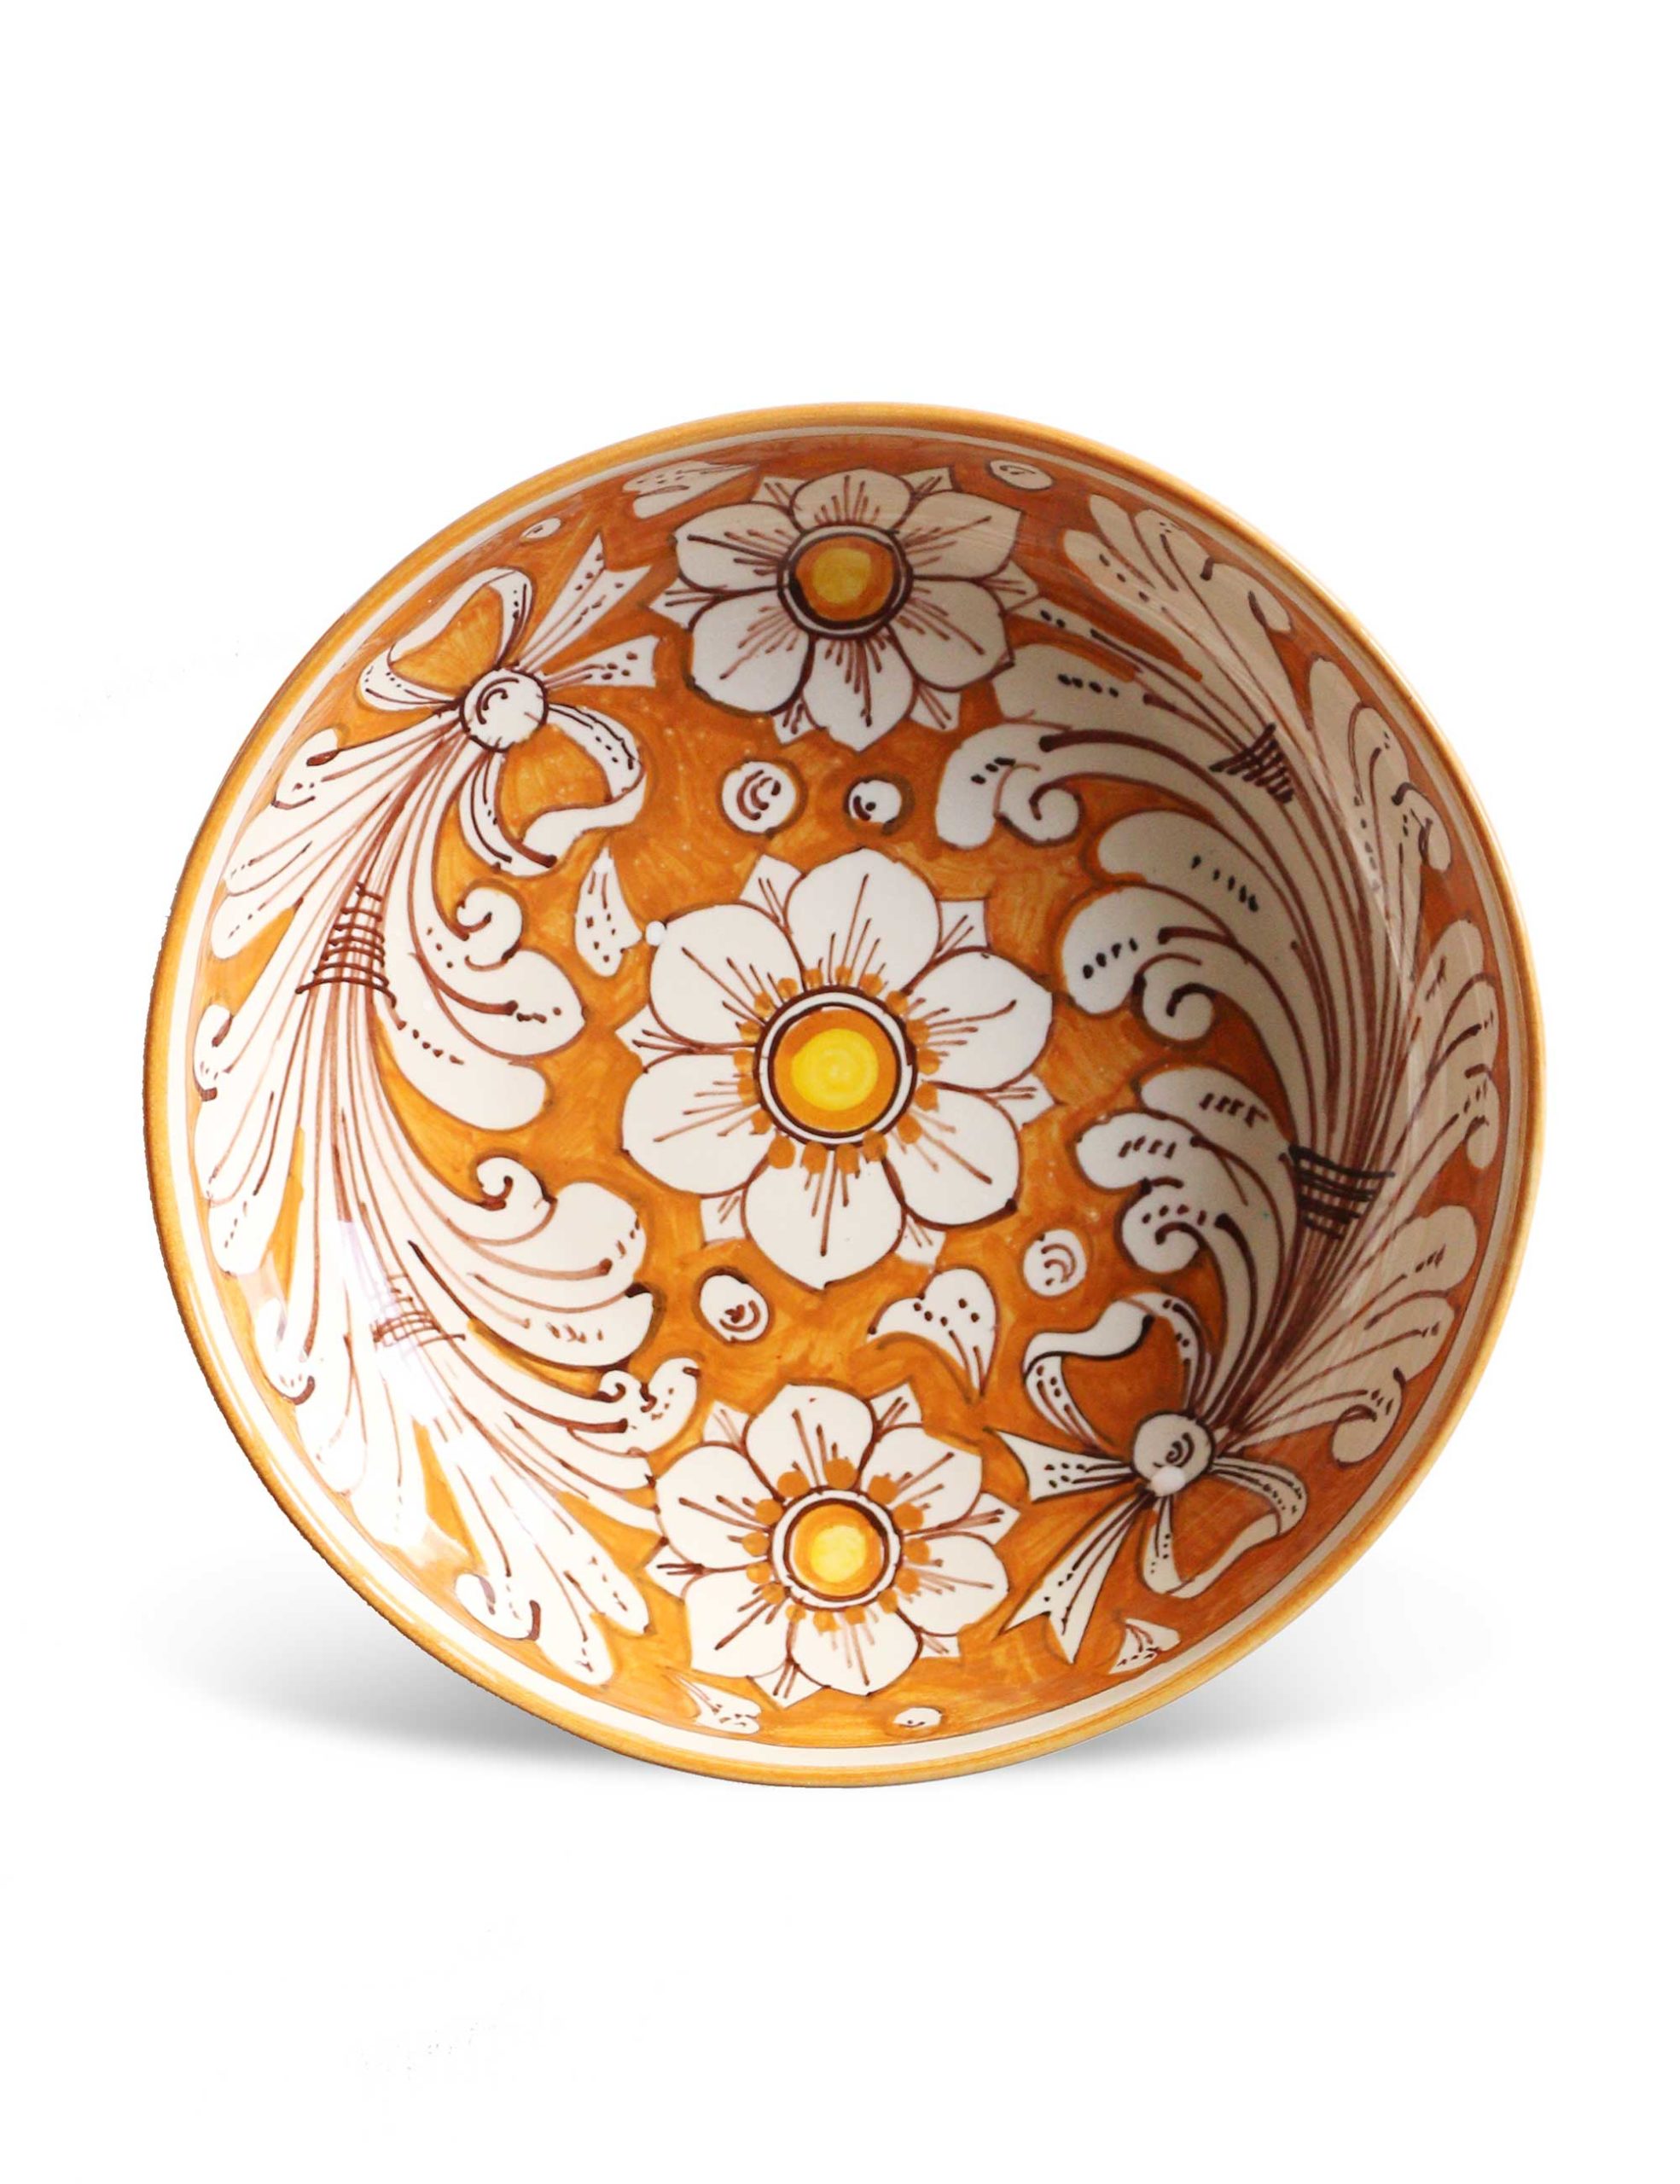 Piatti colorati in ceramica - IMPERFETTI - Set 6 piatti fondi · Manian Shop